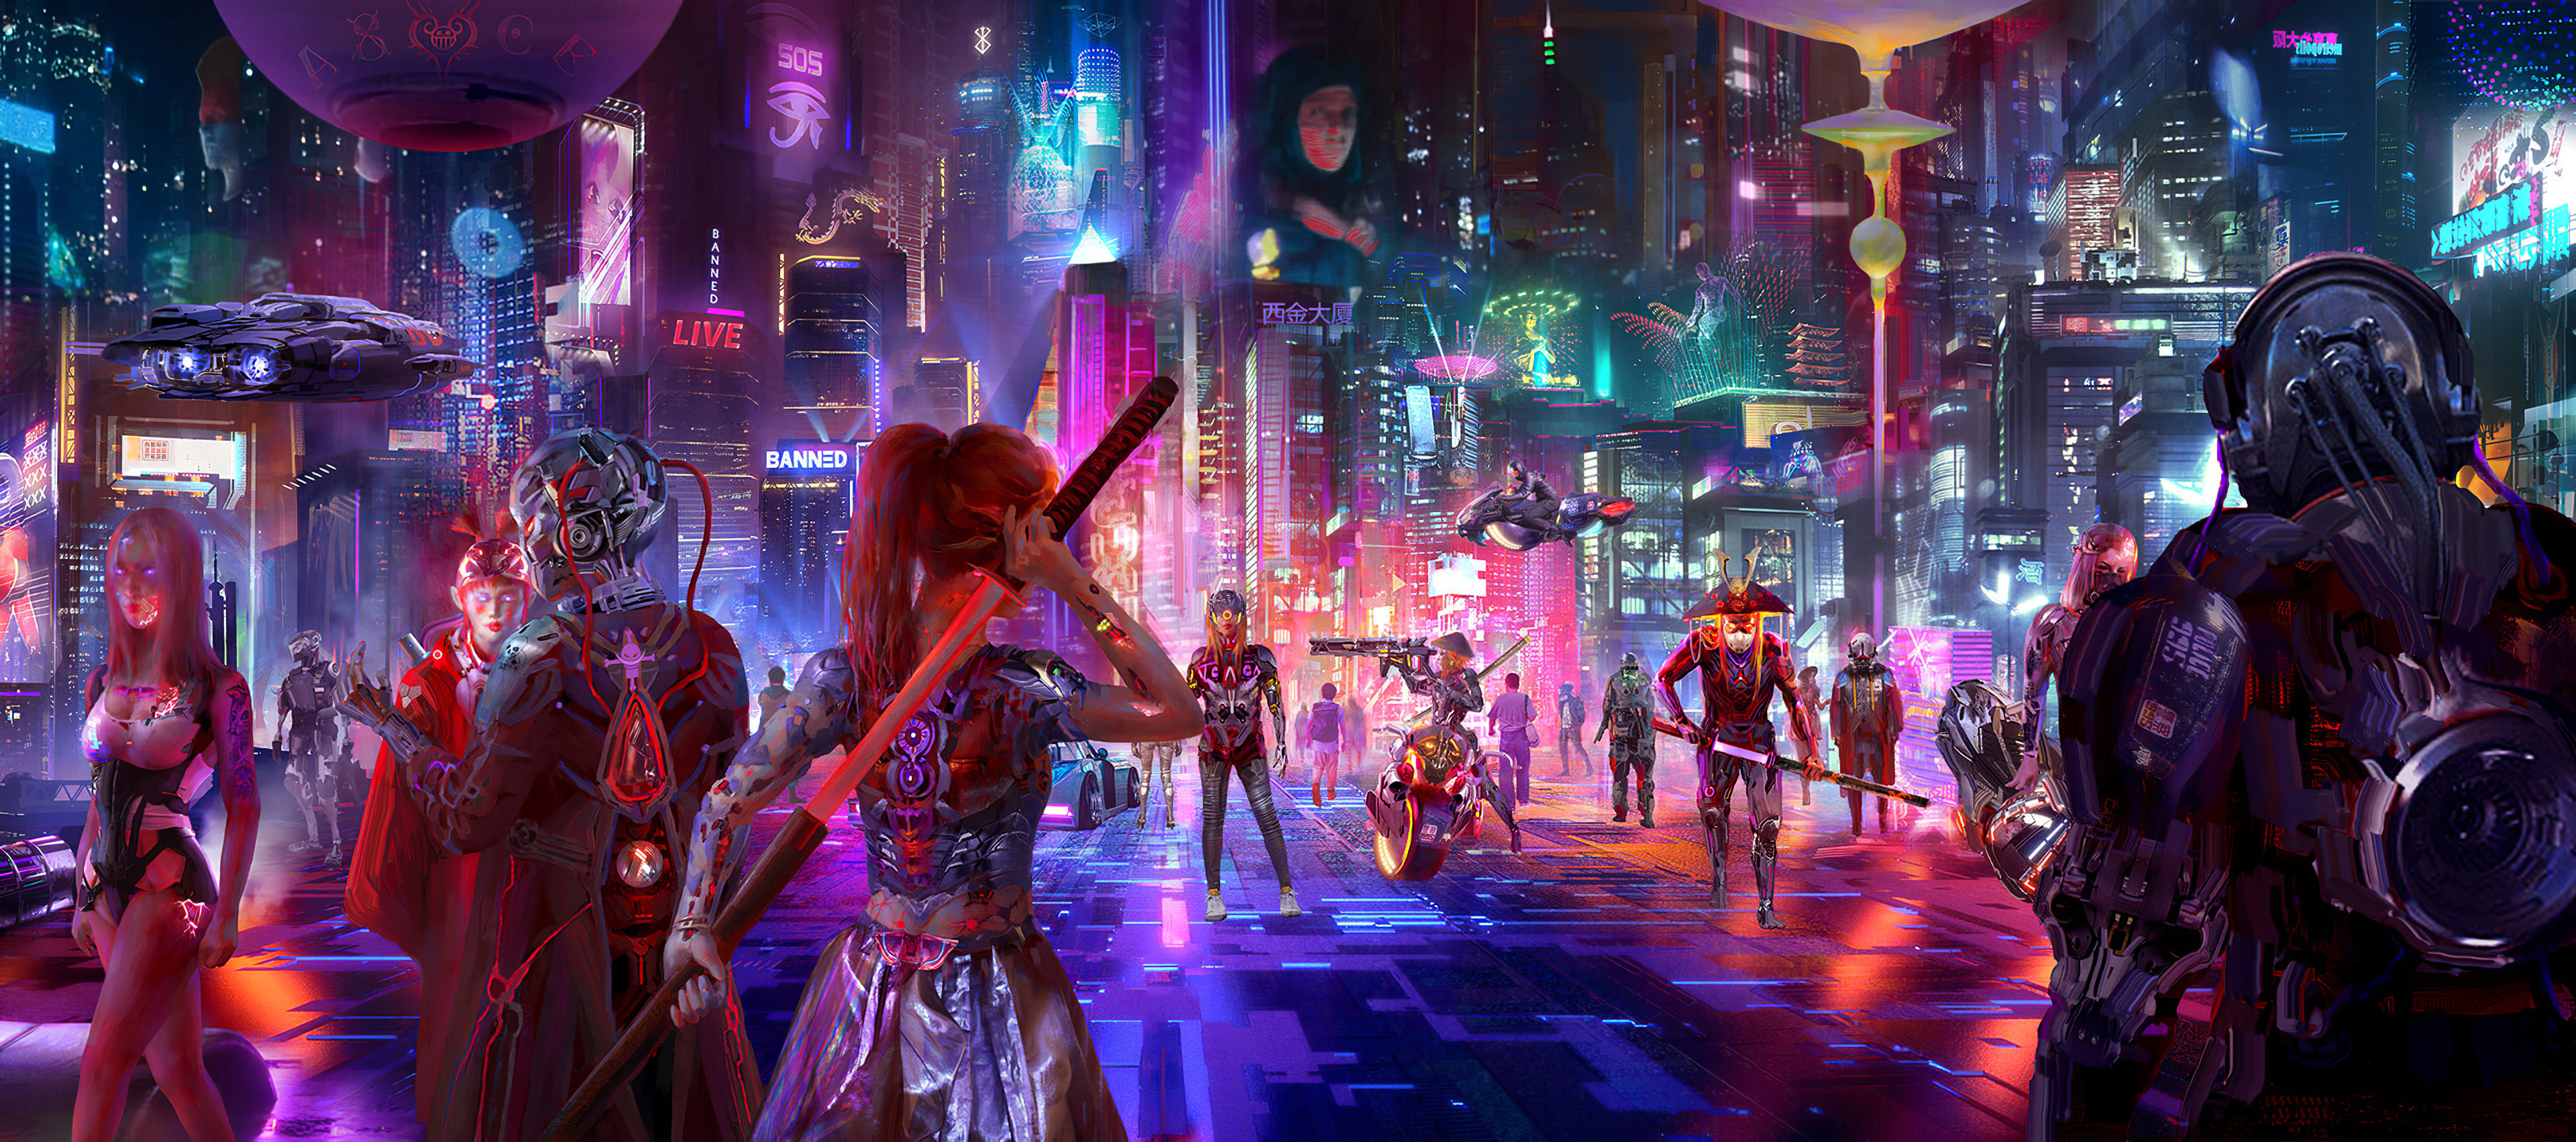 Cyberpunk City Of Shadow 4k, HD Artist, 4k Wallpapers, Images